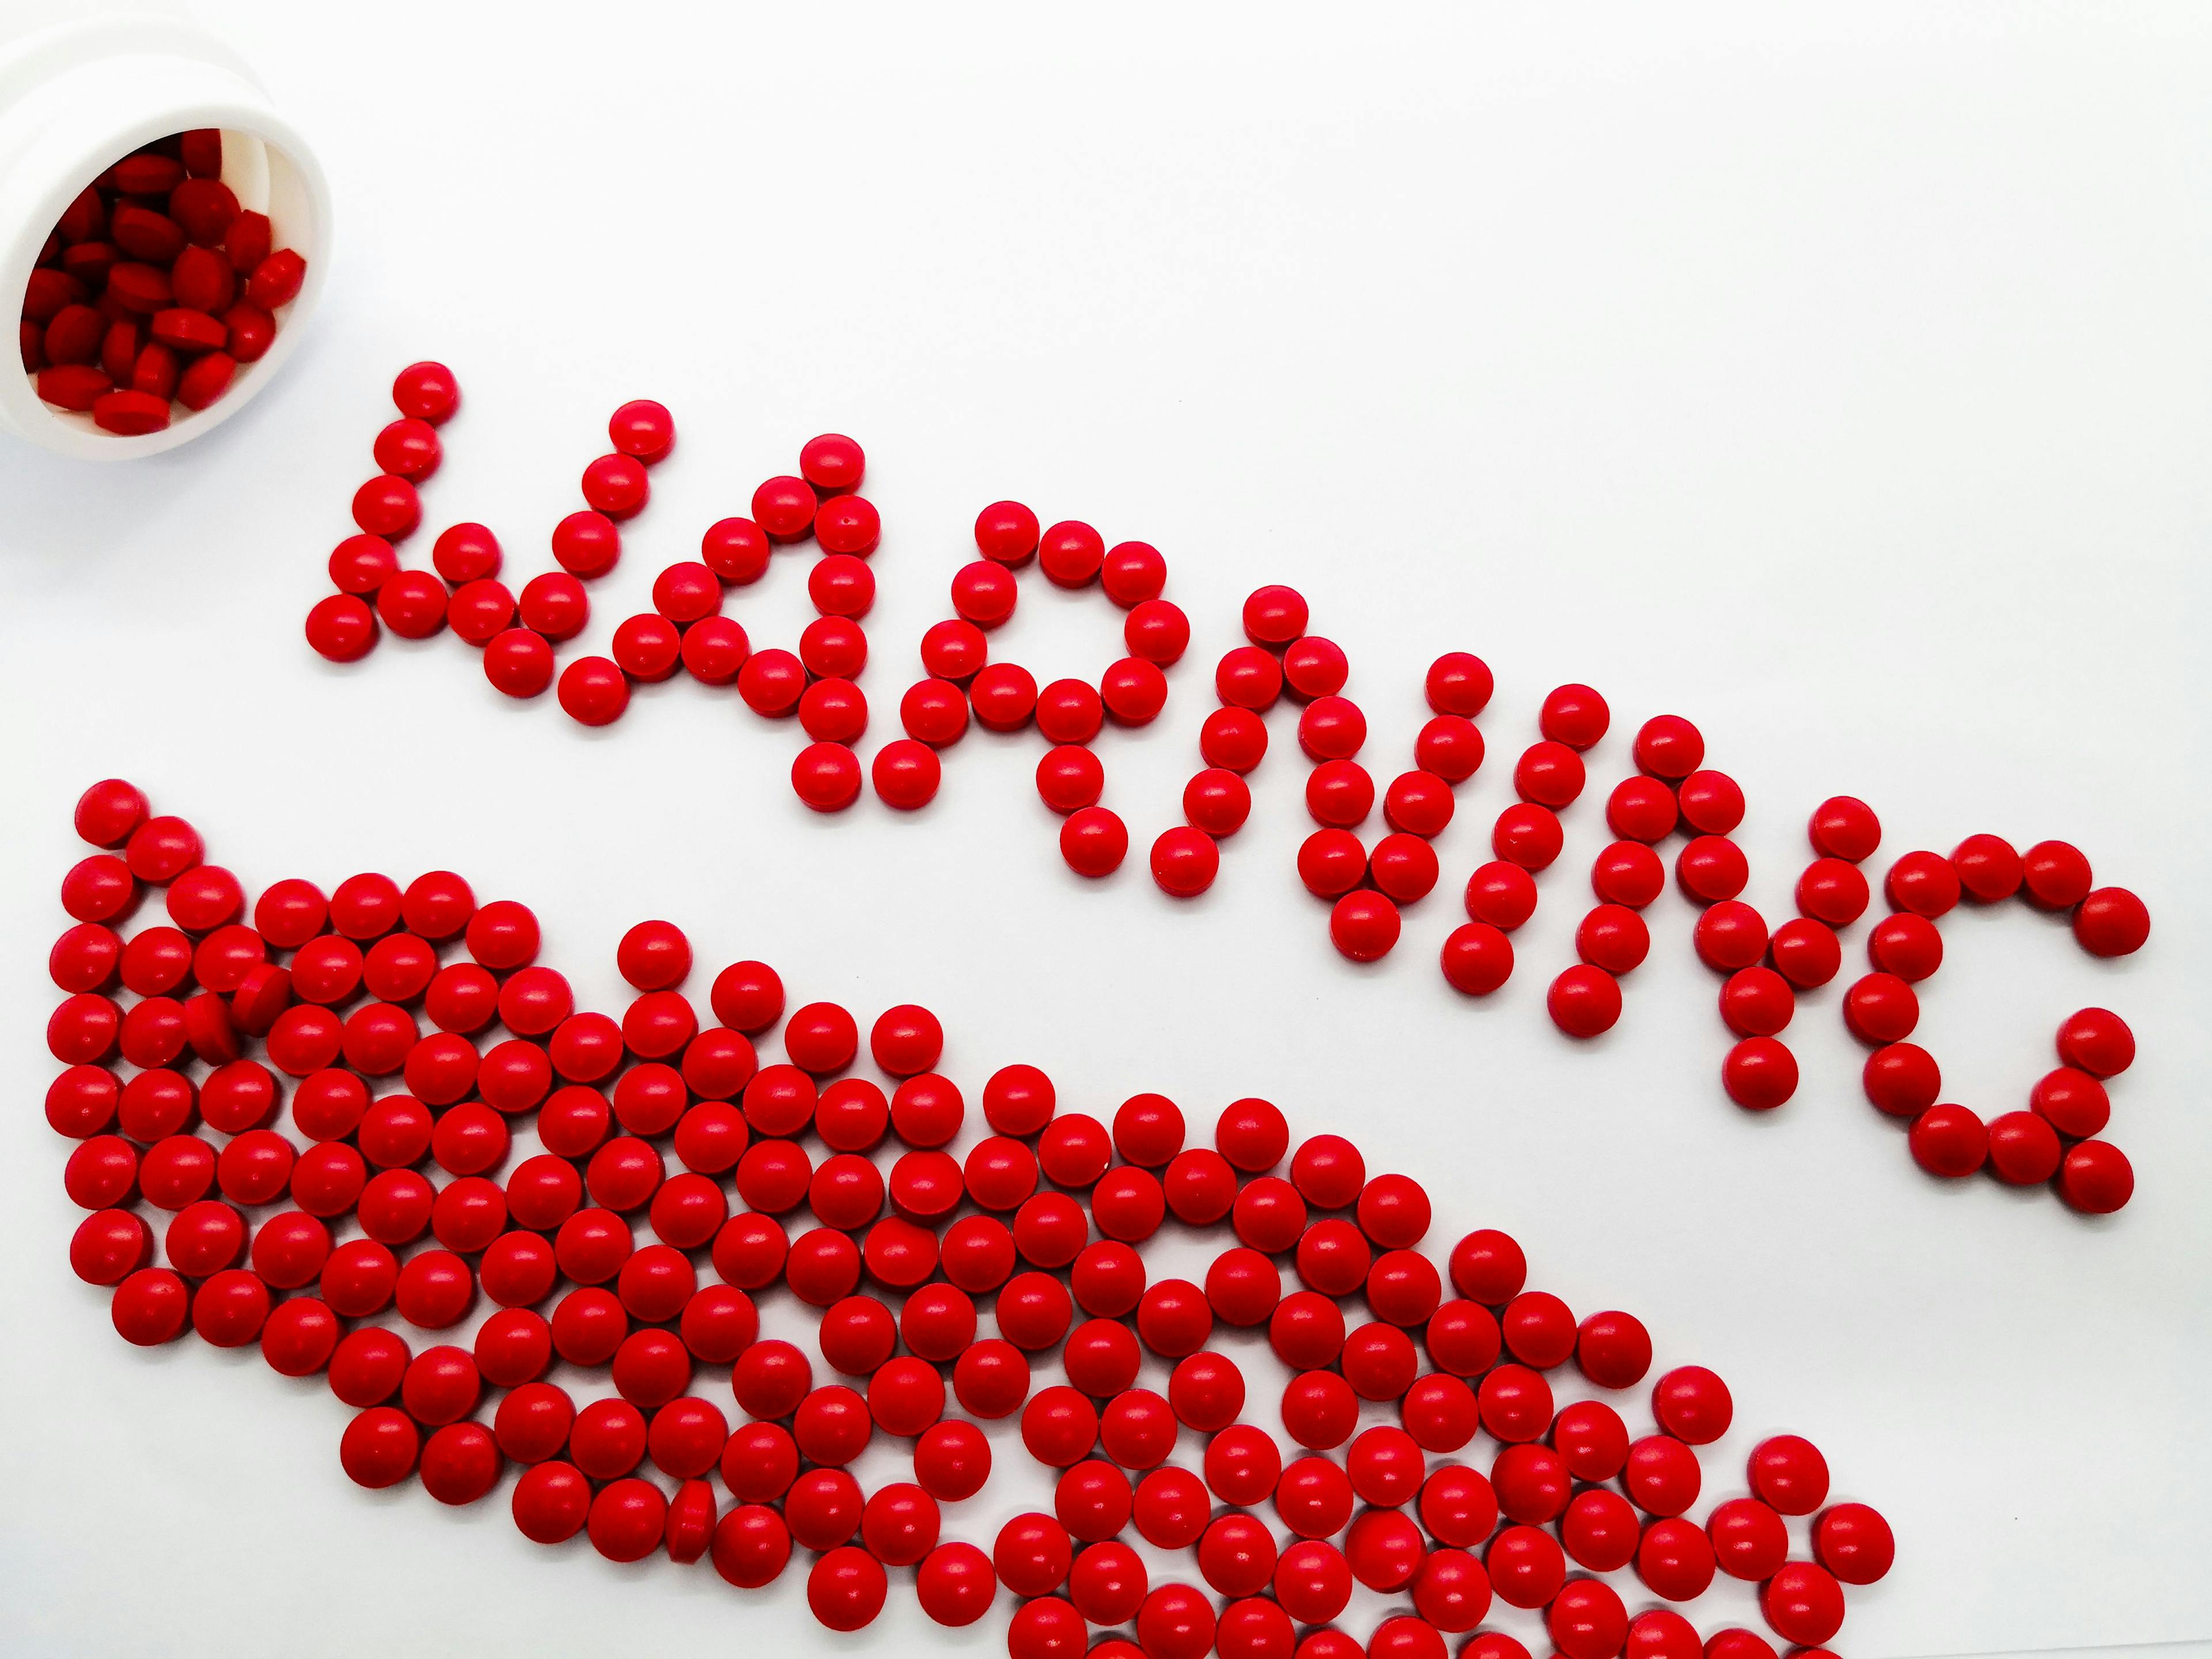 FDA issues new warning on Pfizer’s Xeljanz